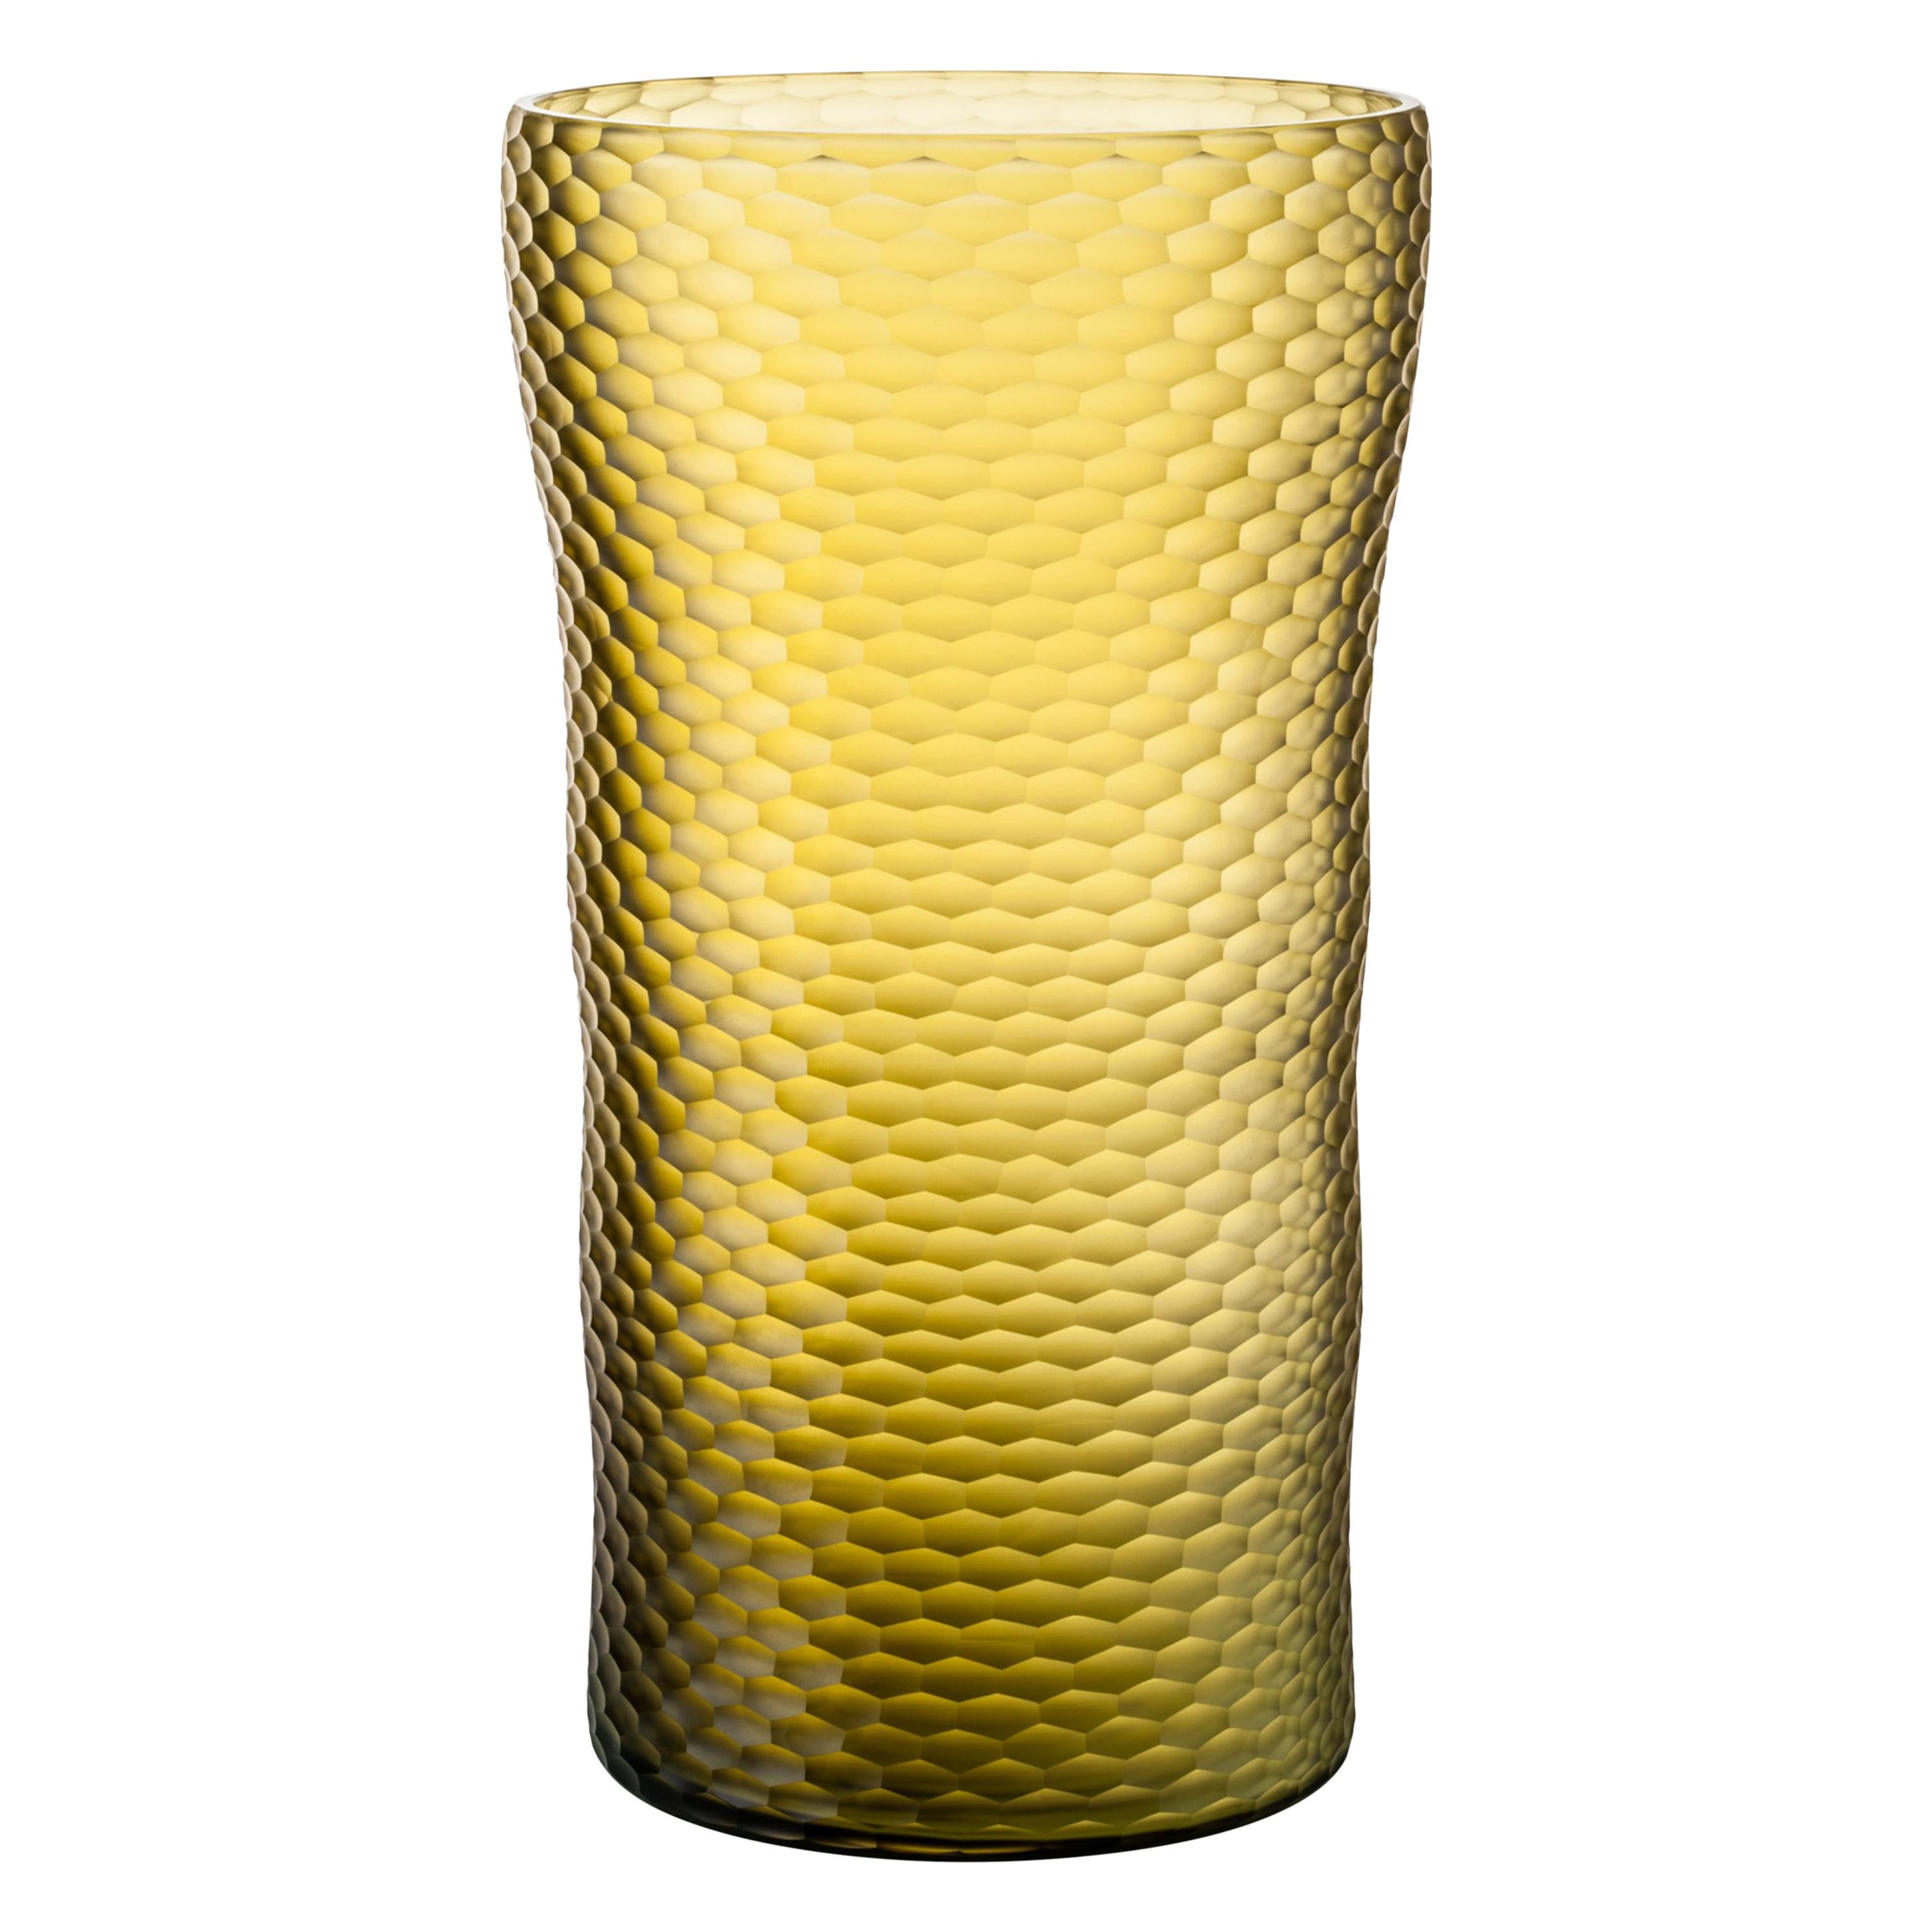 Venini Battuto A Nido D’ape Glass Vase in Straw Yellow by Carlo Scarpa For Sale